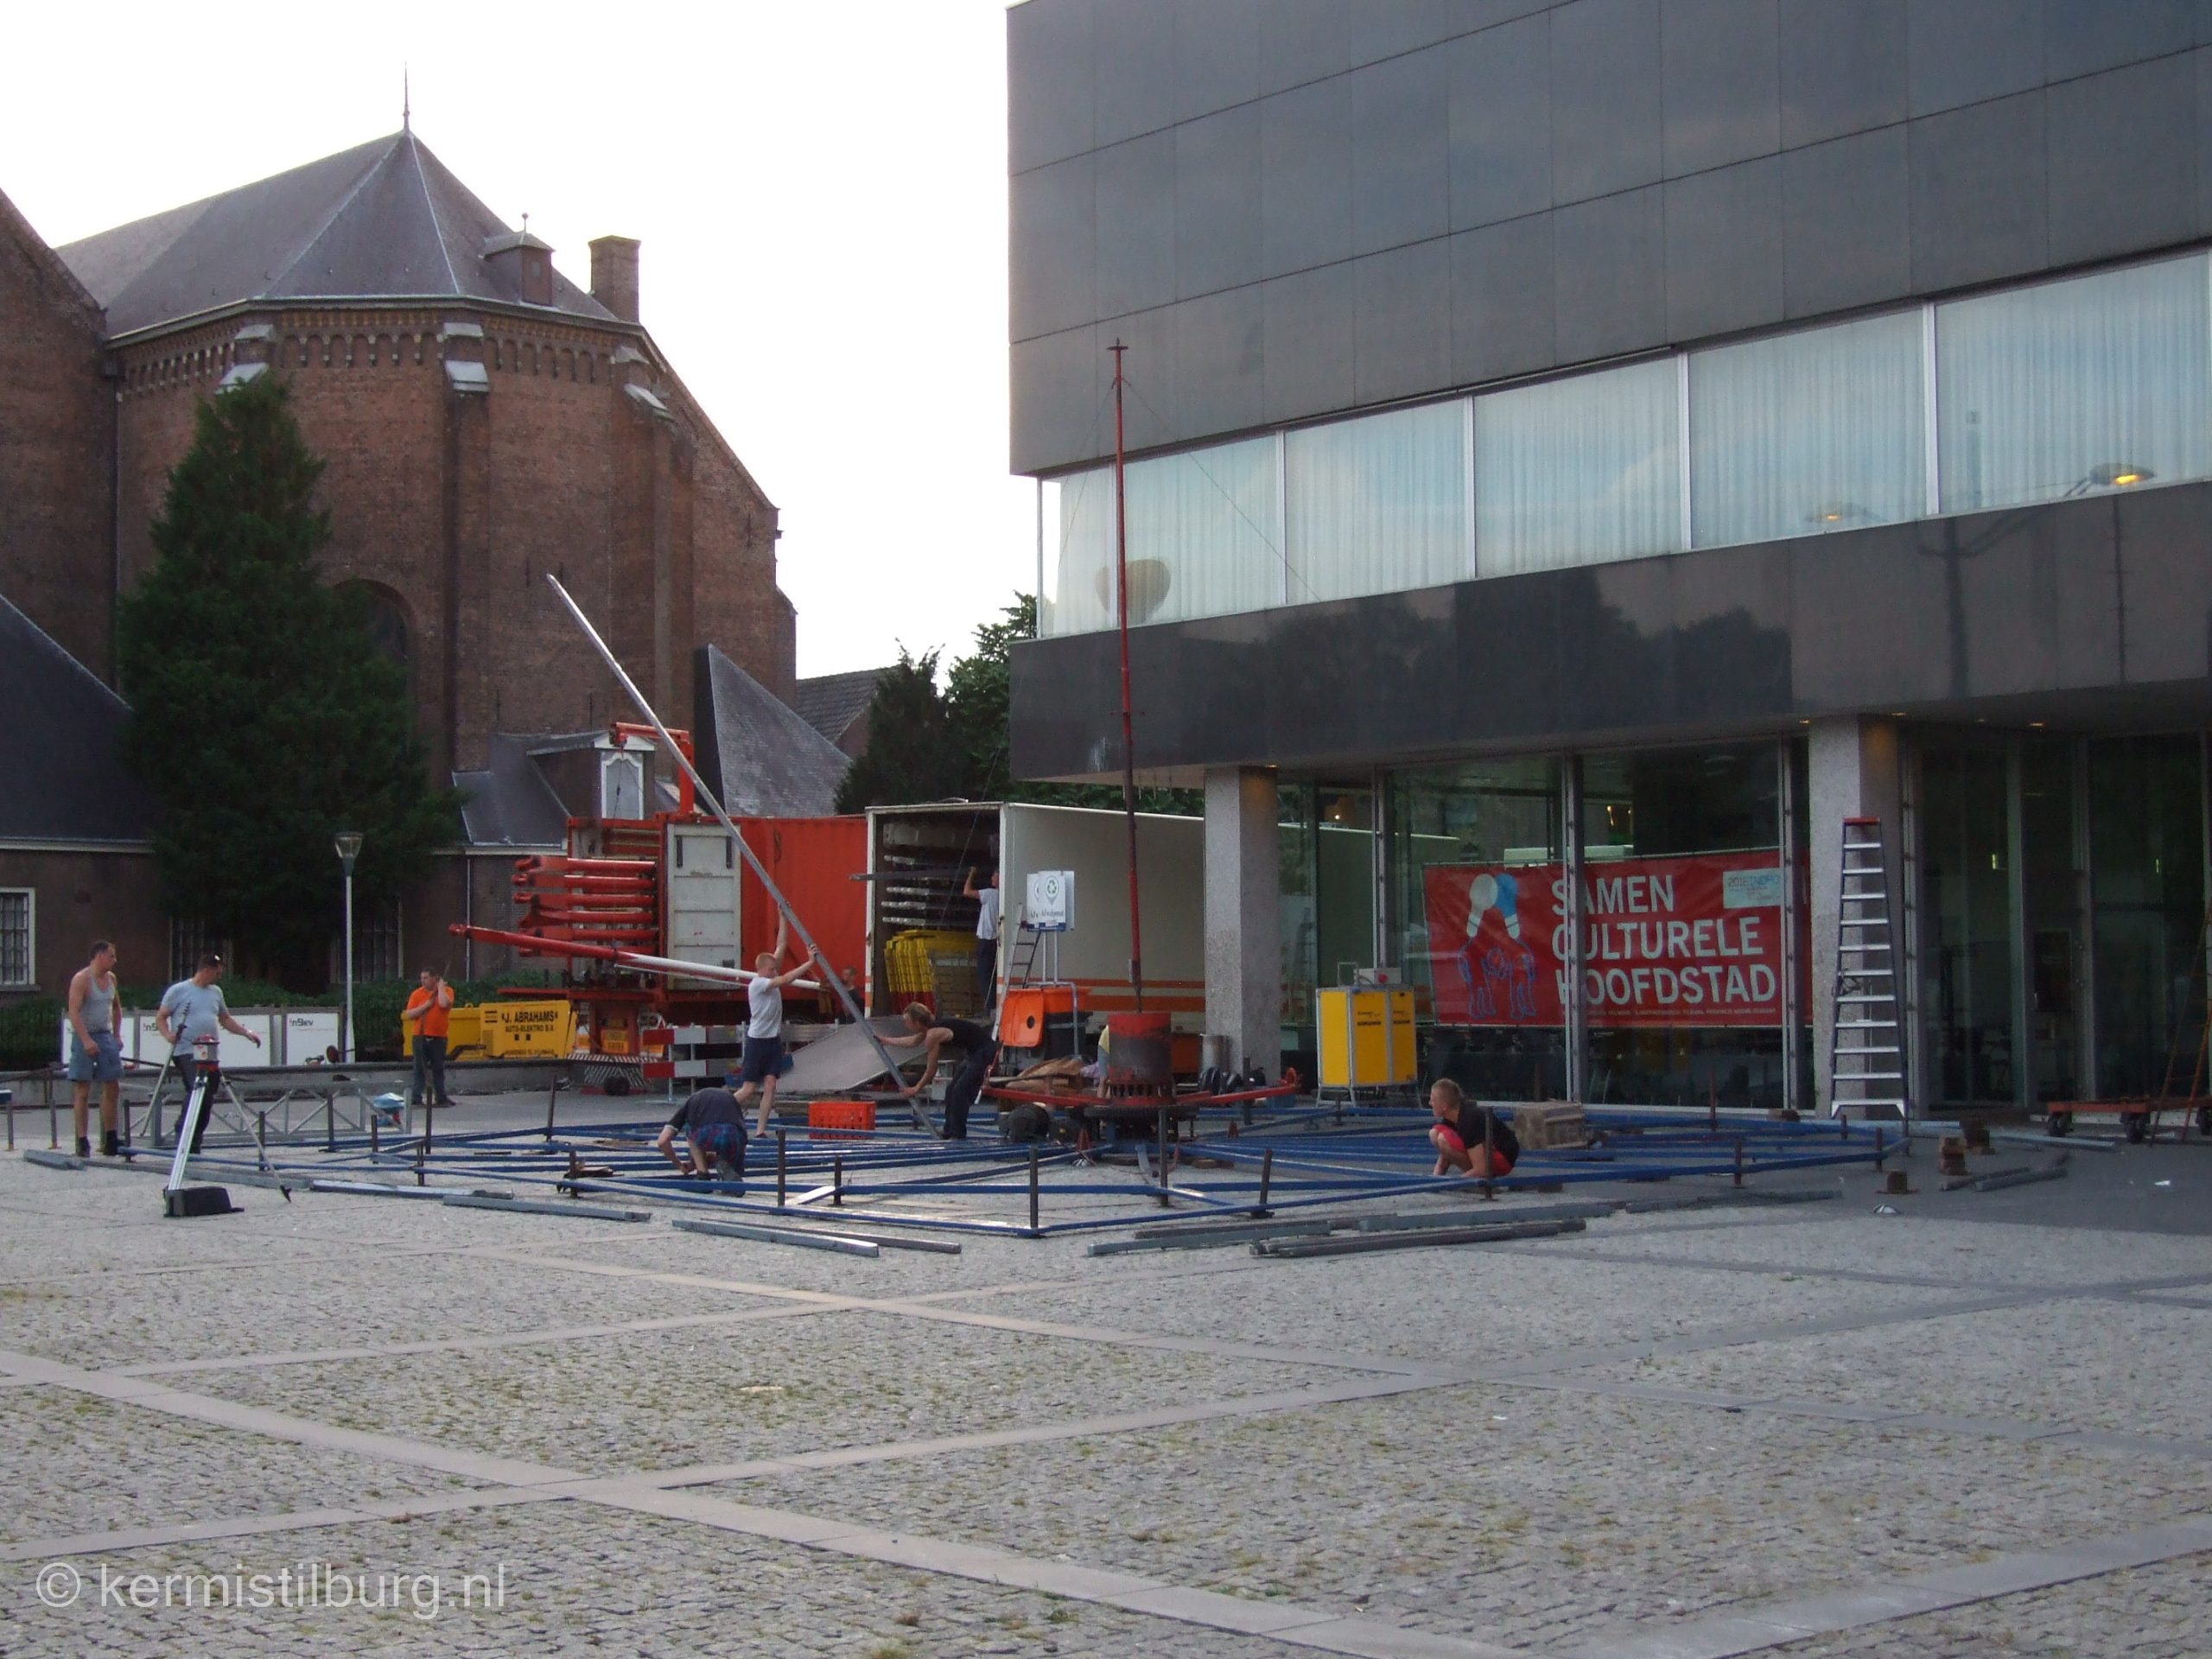 2013, Kermis, Tilburg, Tilburgse kermis, bouwen